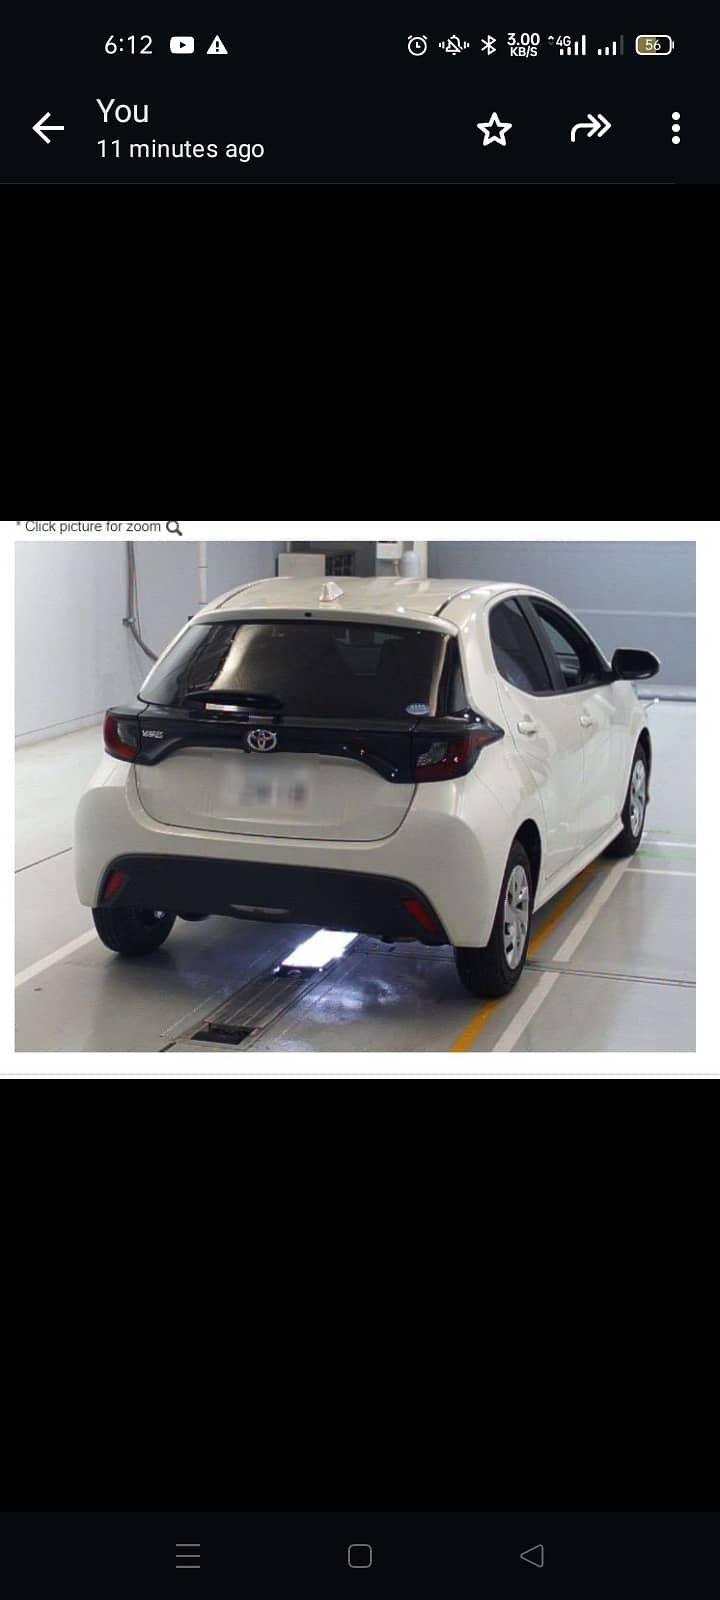 Toyota Yaris hashback full option X package 4.5 9